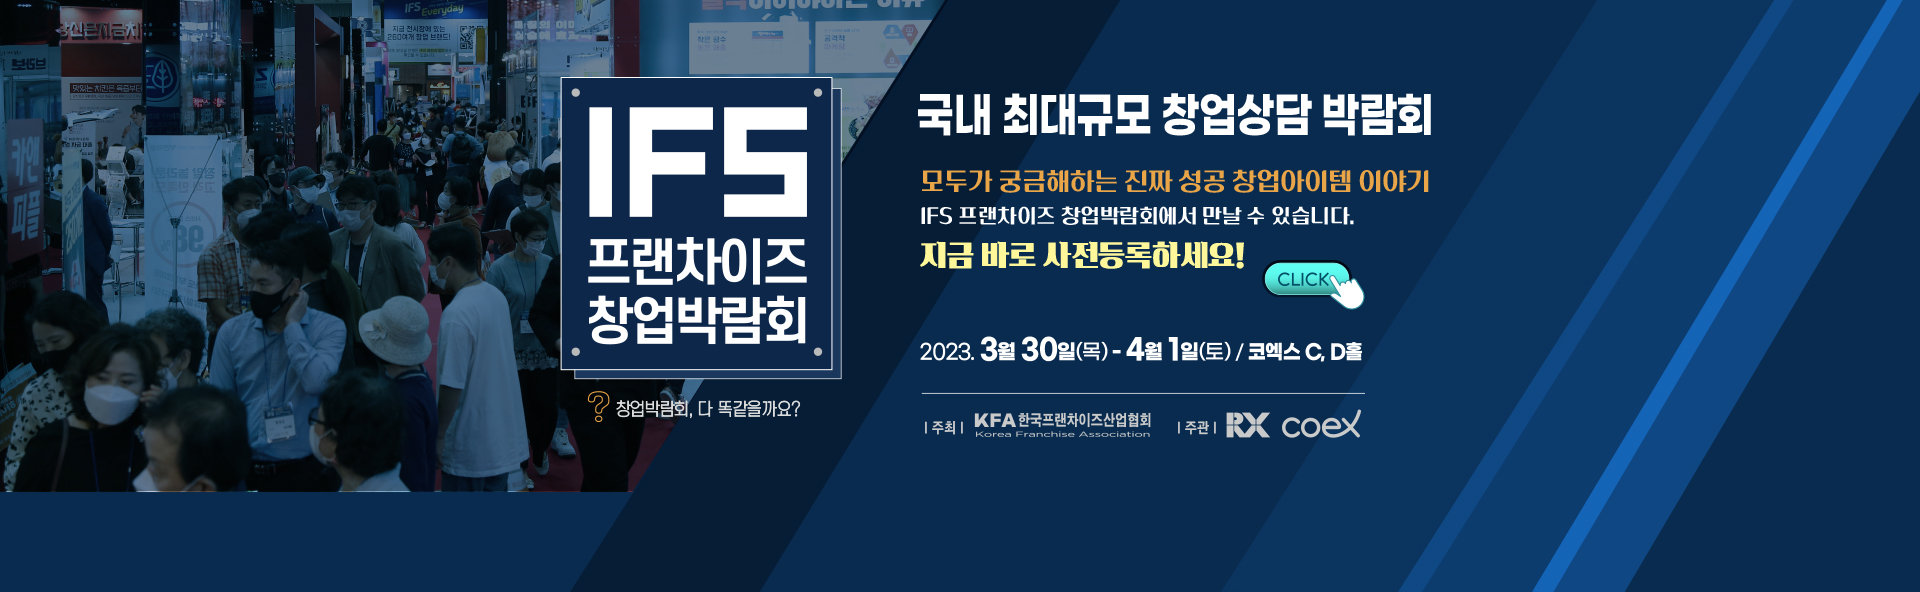 IFS 프랜차이즈 창업박람회 서울 (상반기) 바로가기